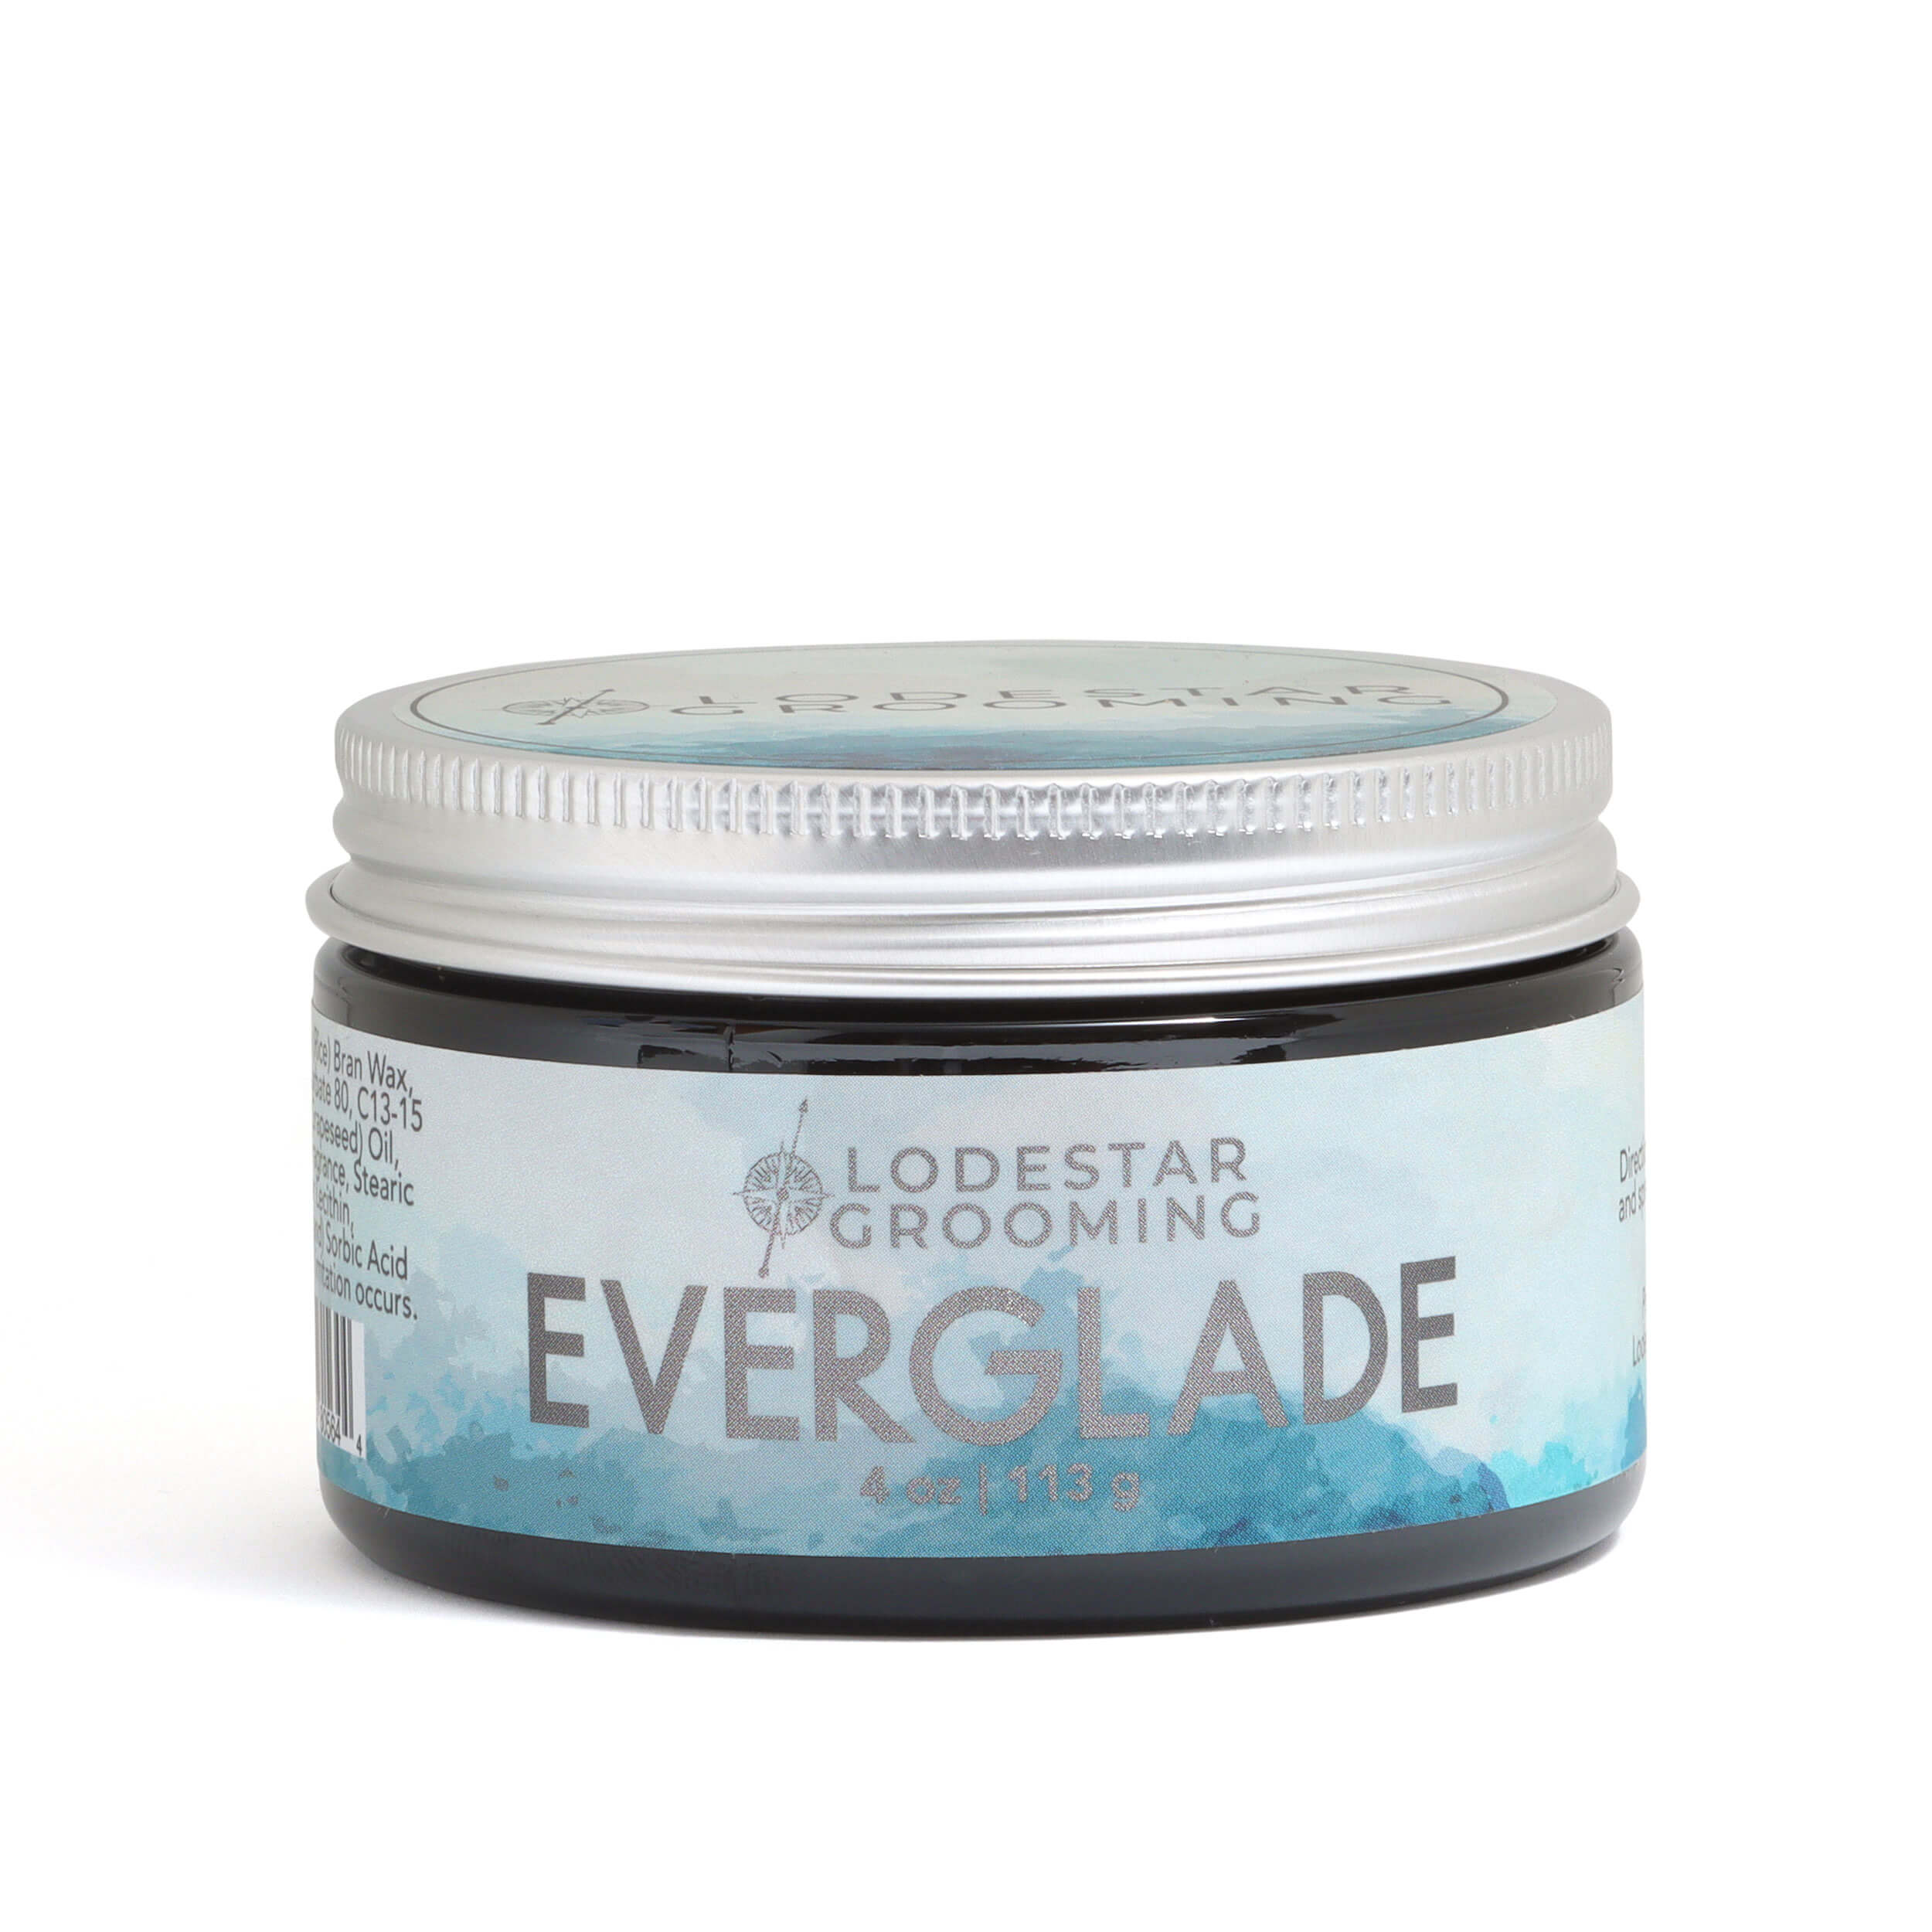 Lodestar Grooming Everglade Styling Cream